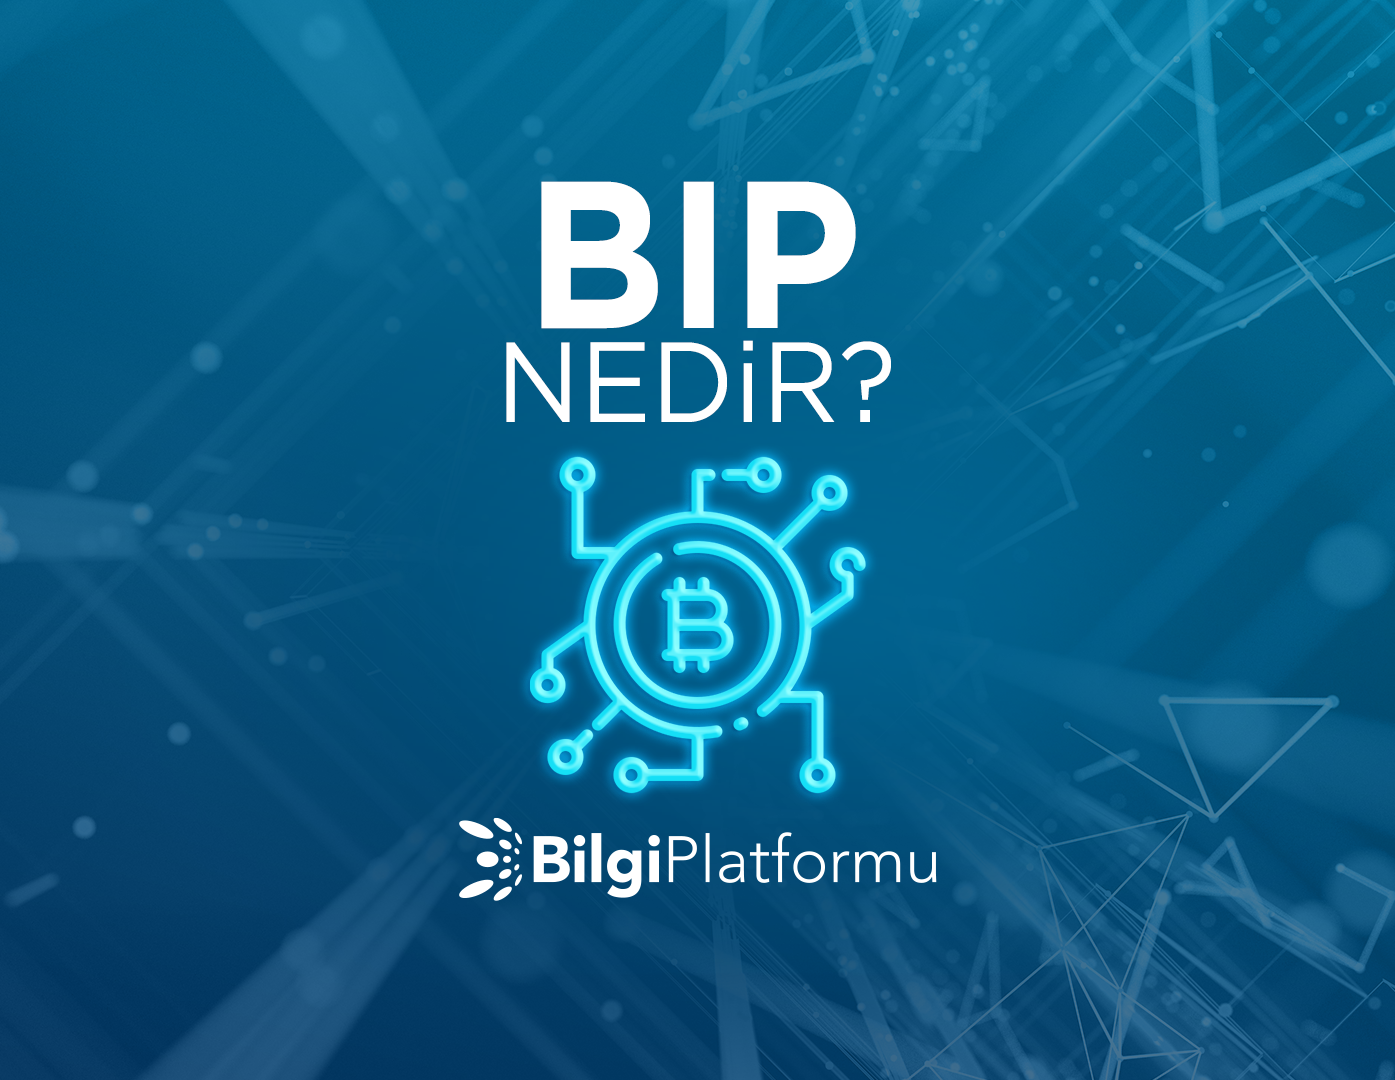 BIP (Bitcoin Improvement Proposal) Nedir?